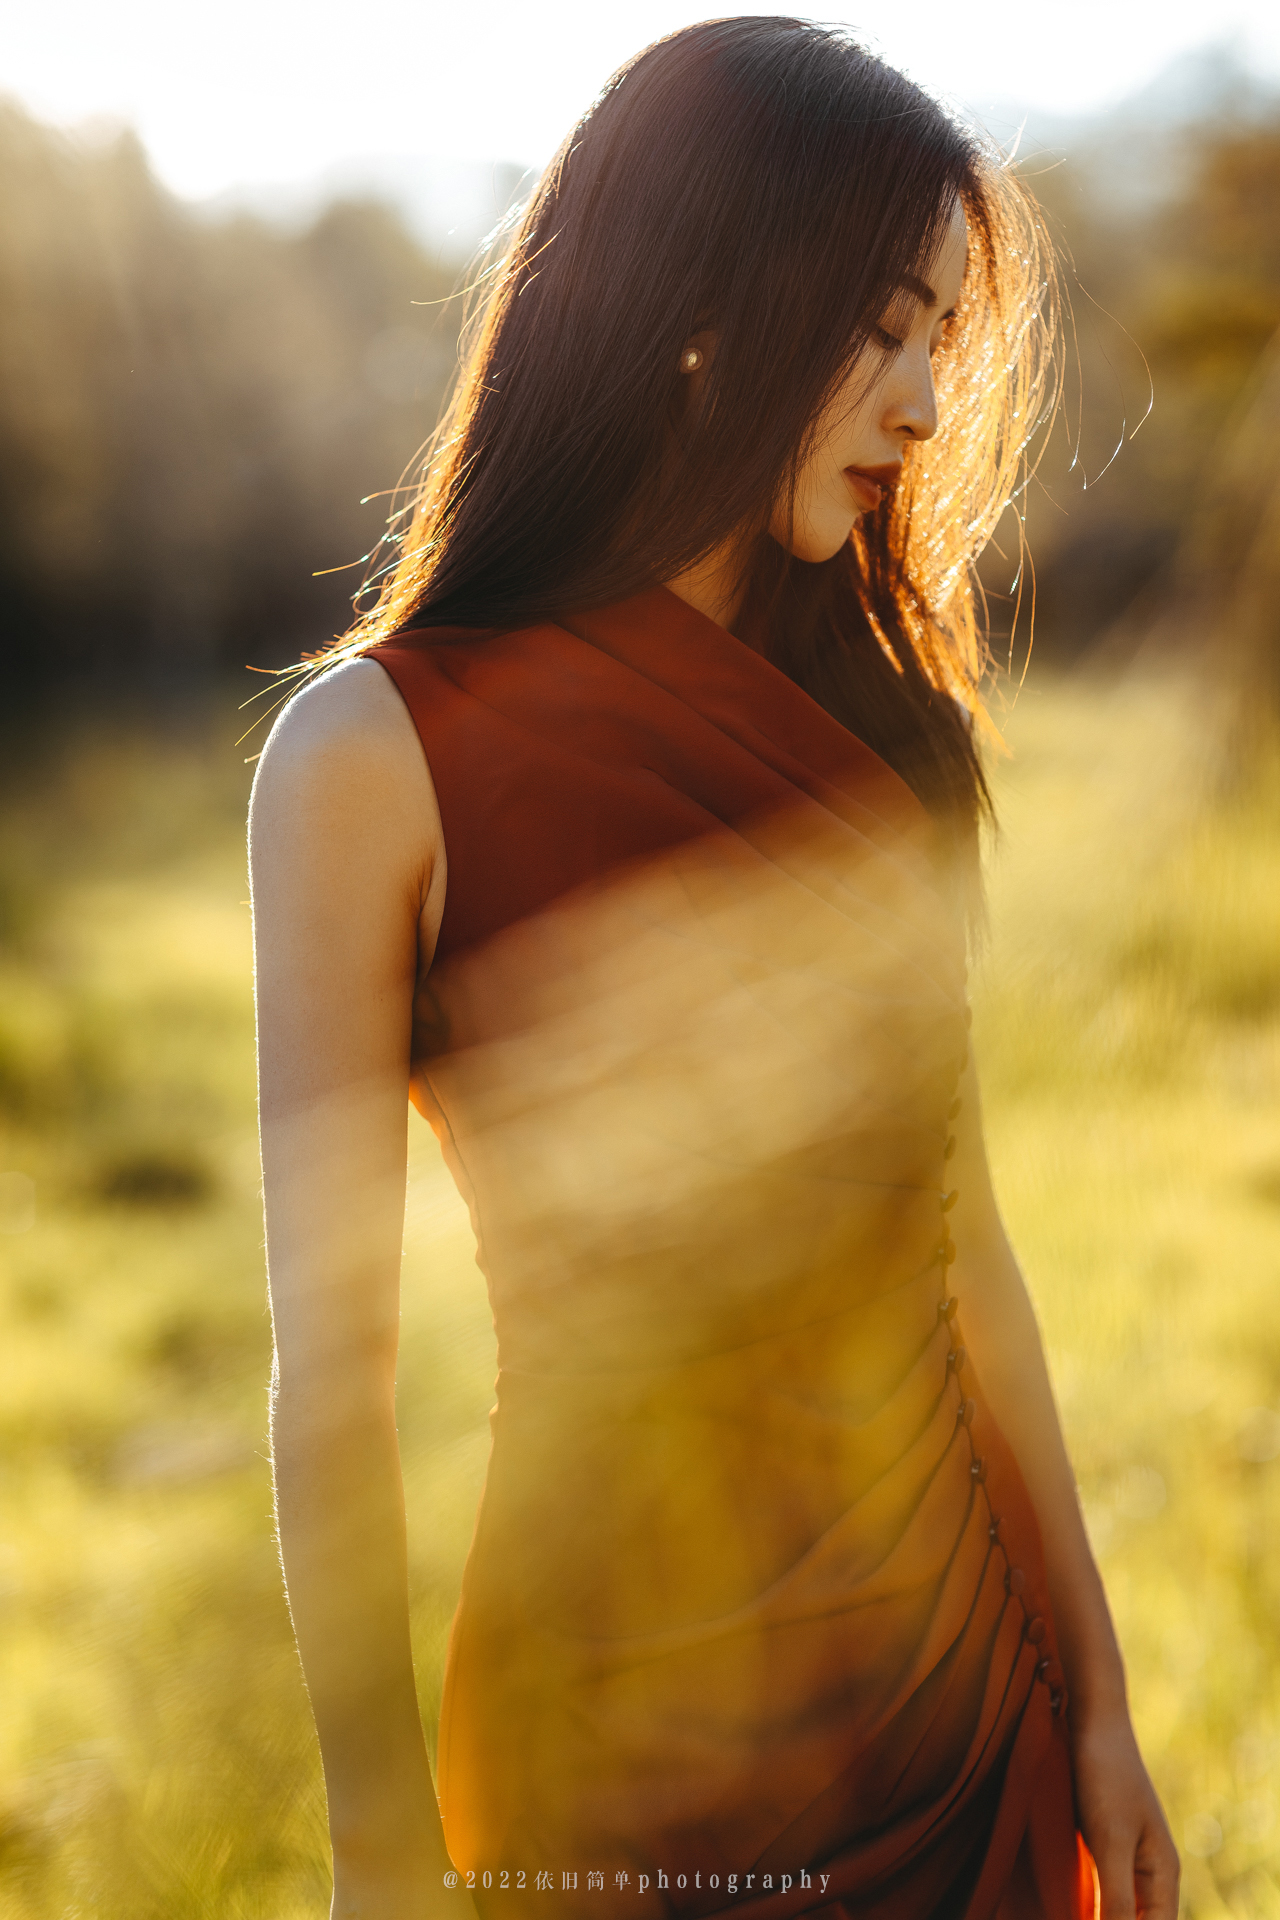 Vij Studio Women Asian Brunette Dress Red Clothing Lipstick Outdoors Sunlight Sun Rays Model Women O 1280x1920